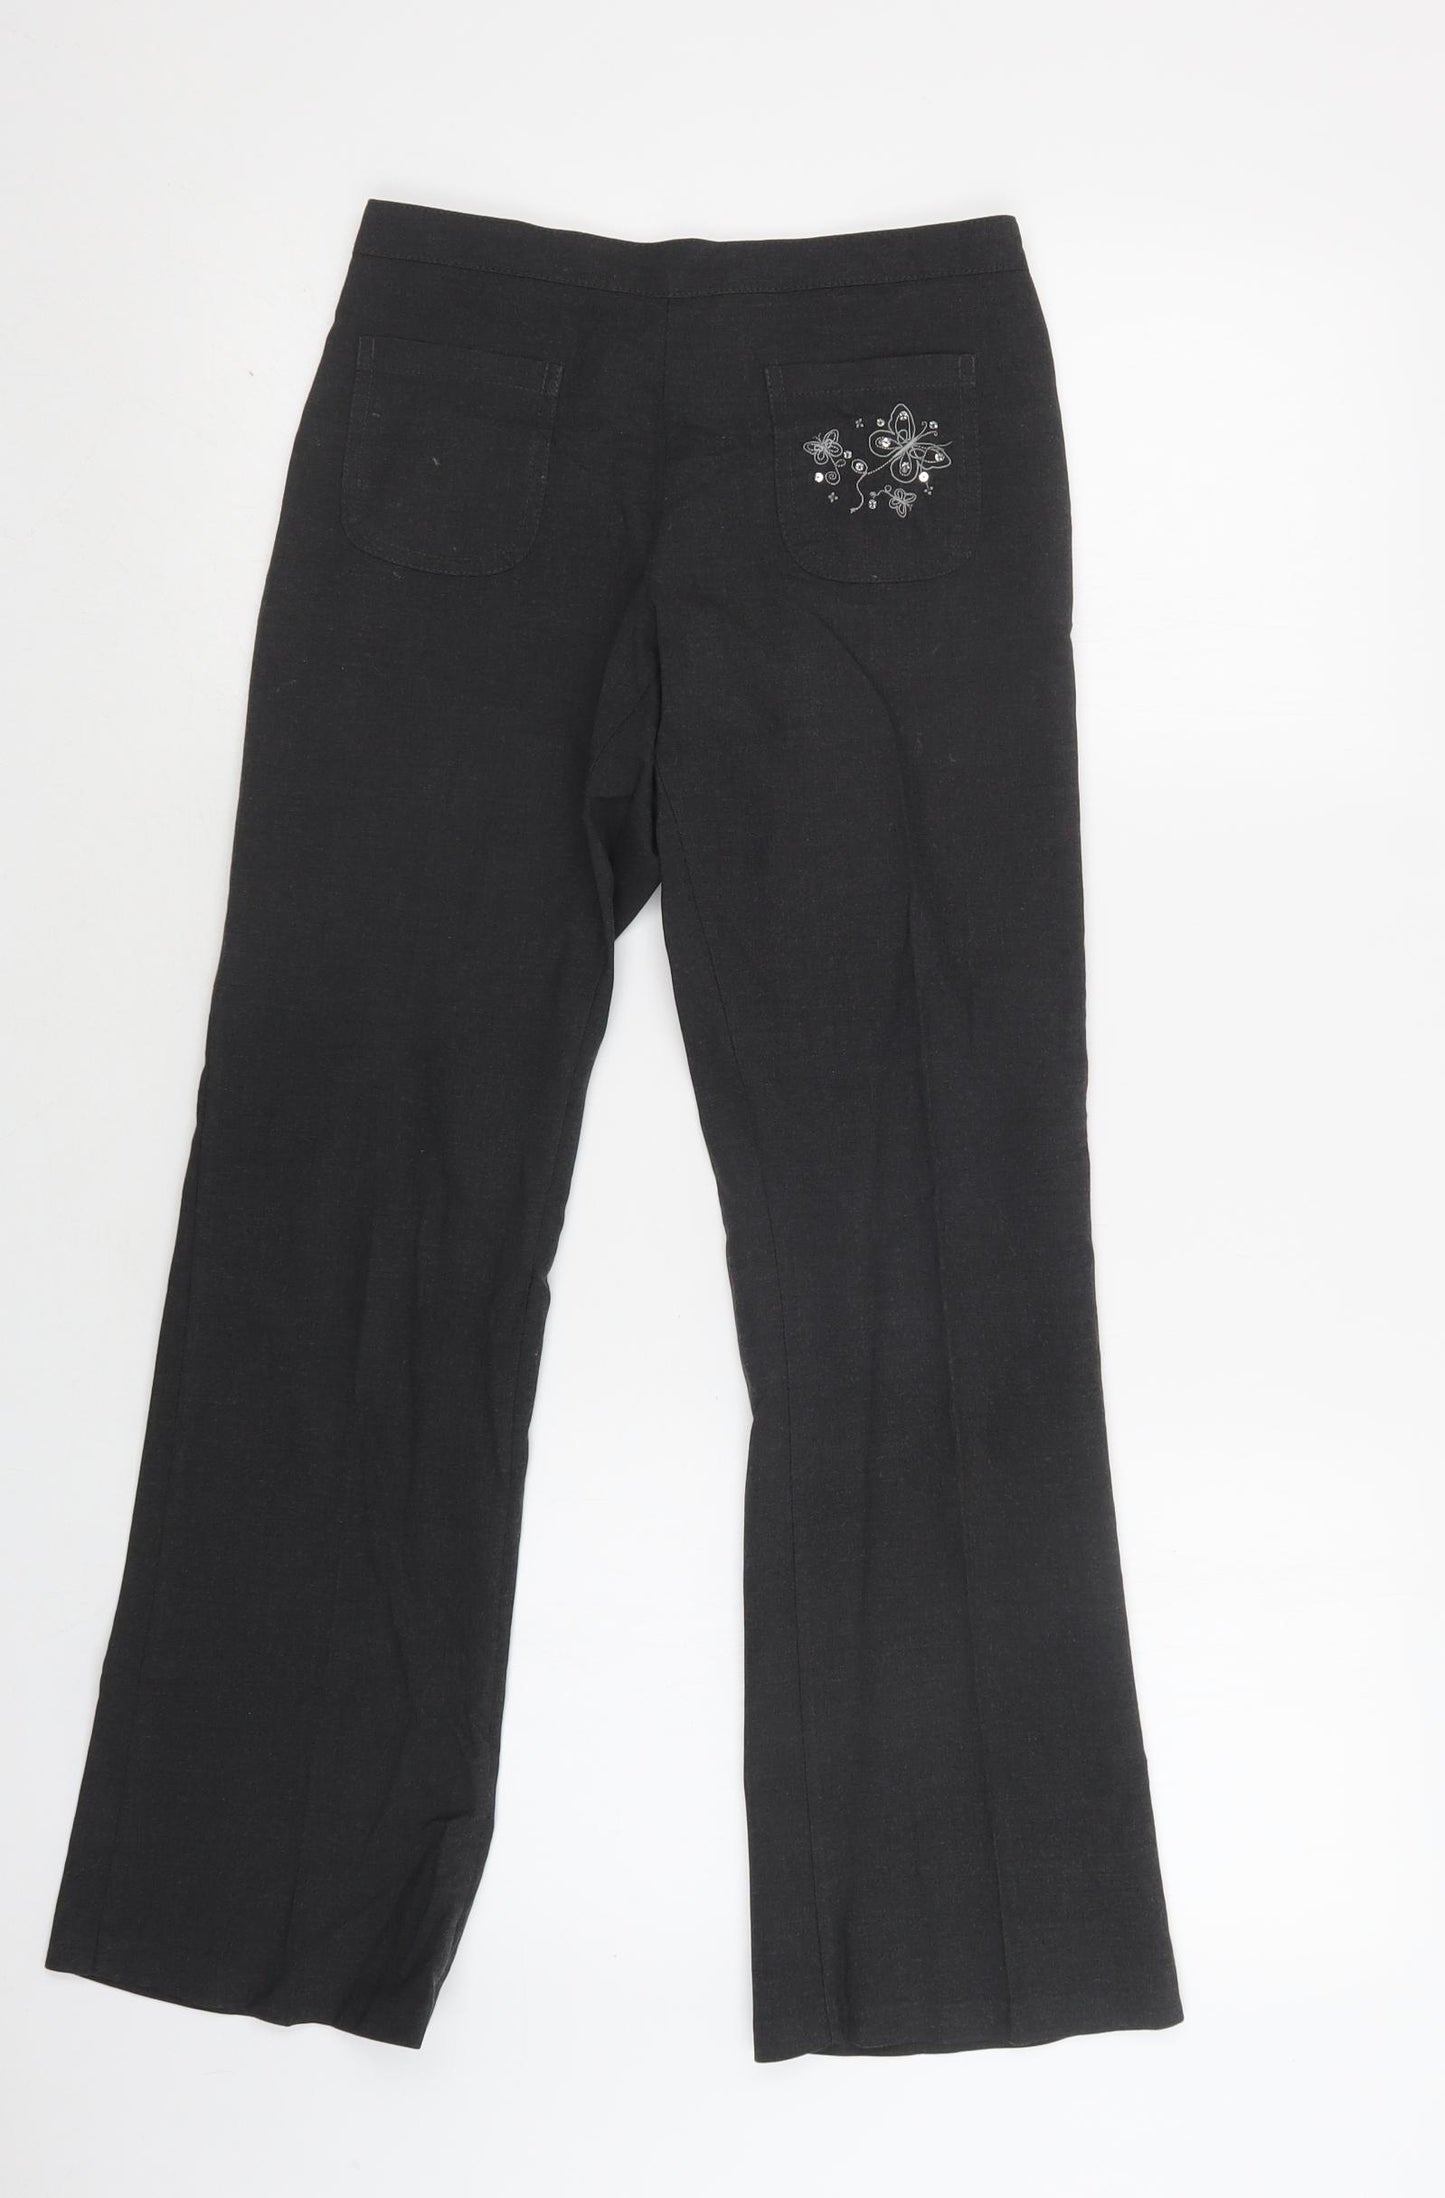 M&S Girls Grey  Polyester Dress Pants Trousers Size 12 Years  Regular  - School Wear